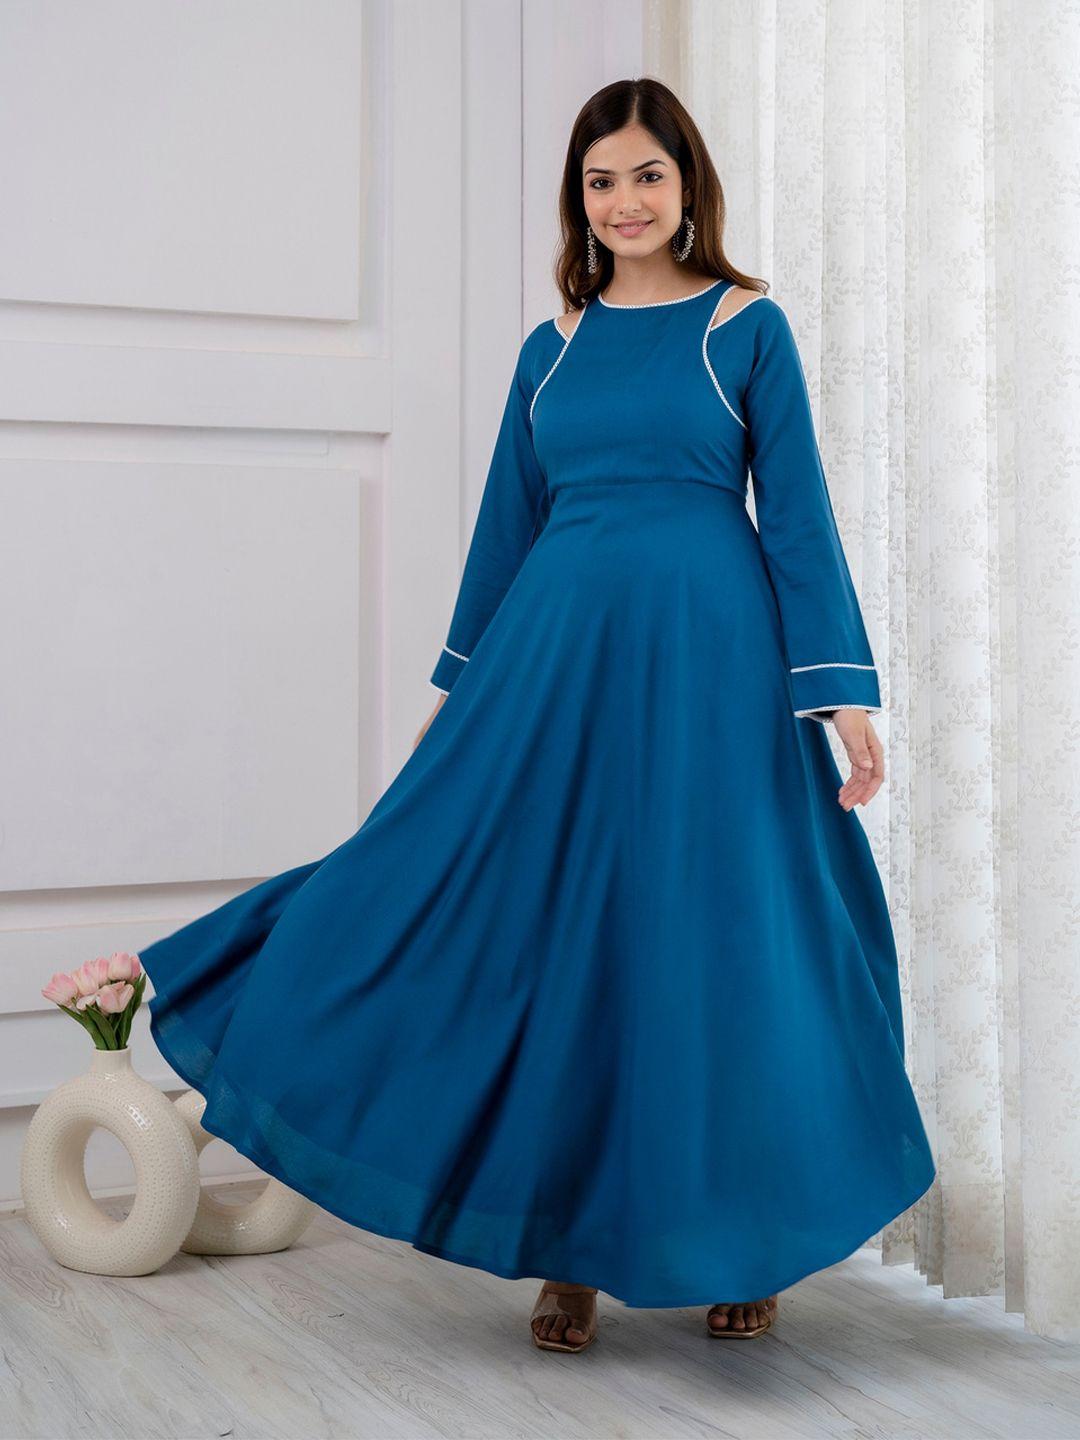 purshottam wala blue applique maxi dress